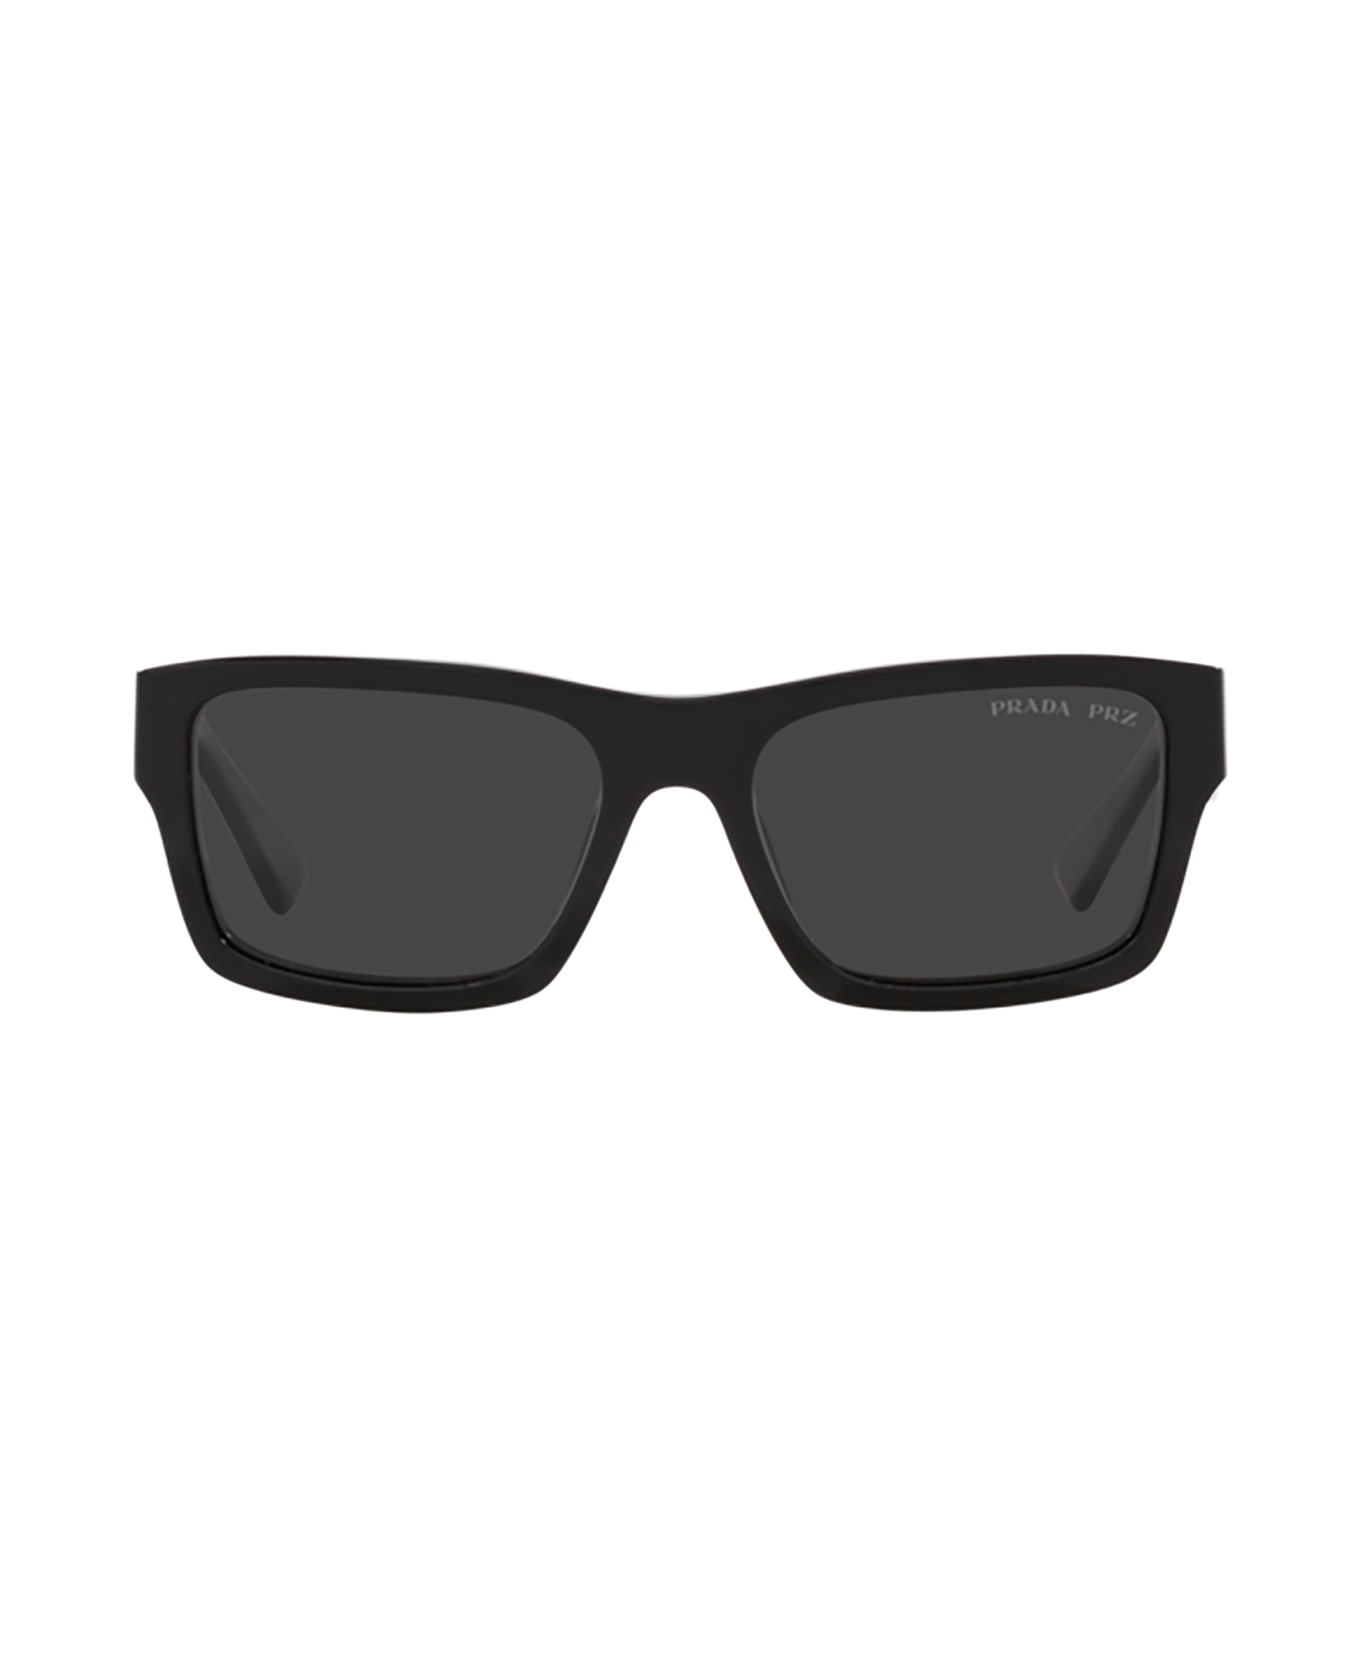 Prada Eyewear Pr 25zs Black Sunglasses - Black サングラス